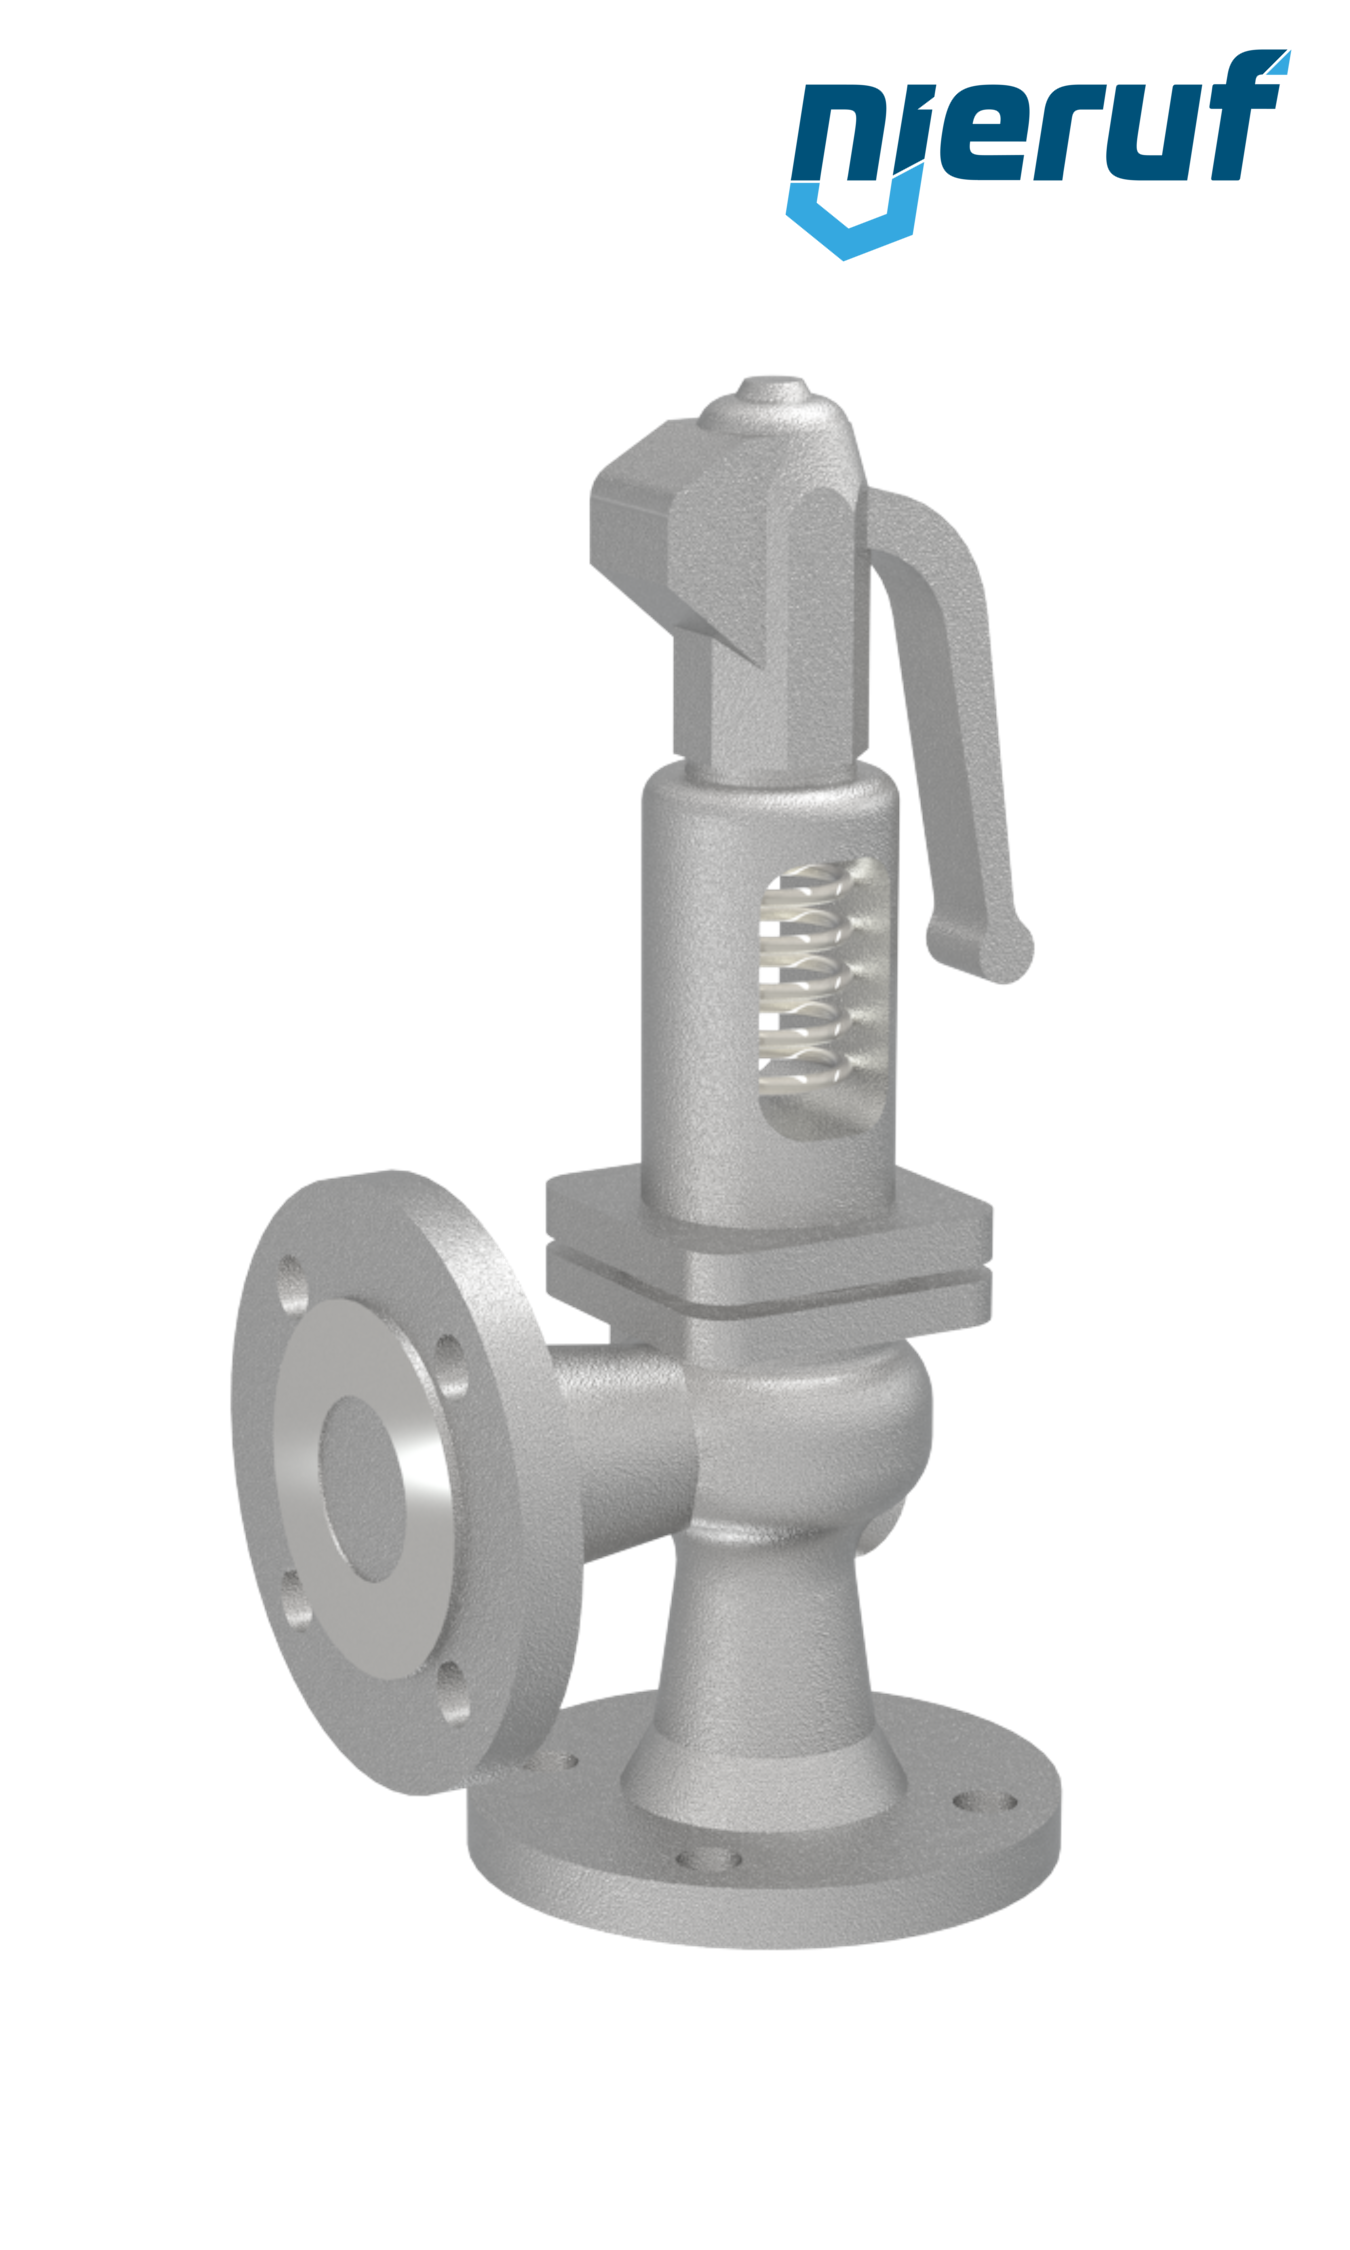 flange-safety valve DN100/DN100 SF0102, cast iron EN-JL1040 EPDM, with lever